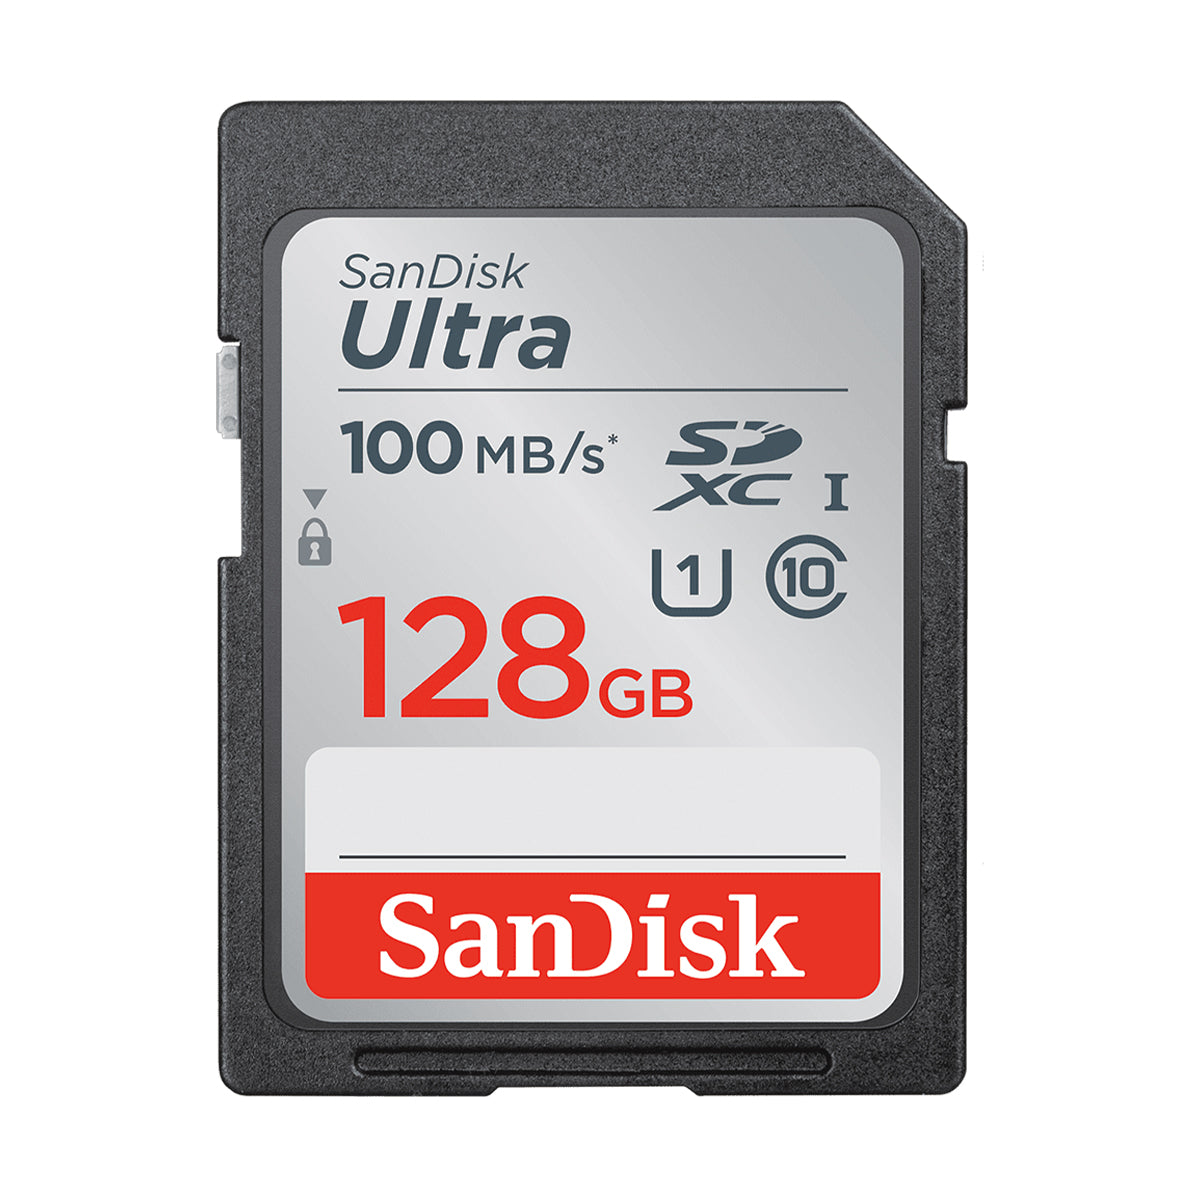 SanDisk Ultra 128GB SDXC Class 10 100MB/s Memory Card